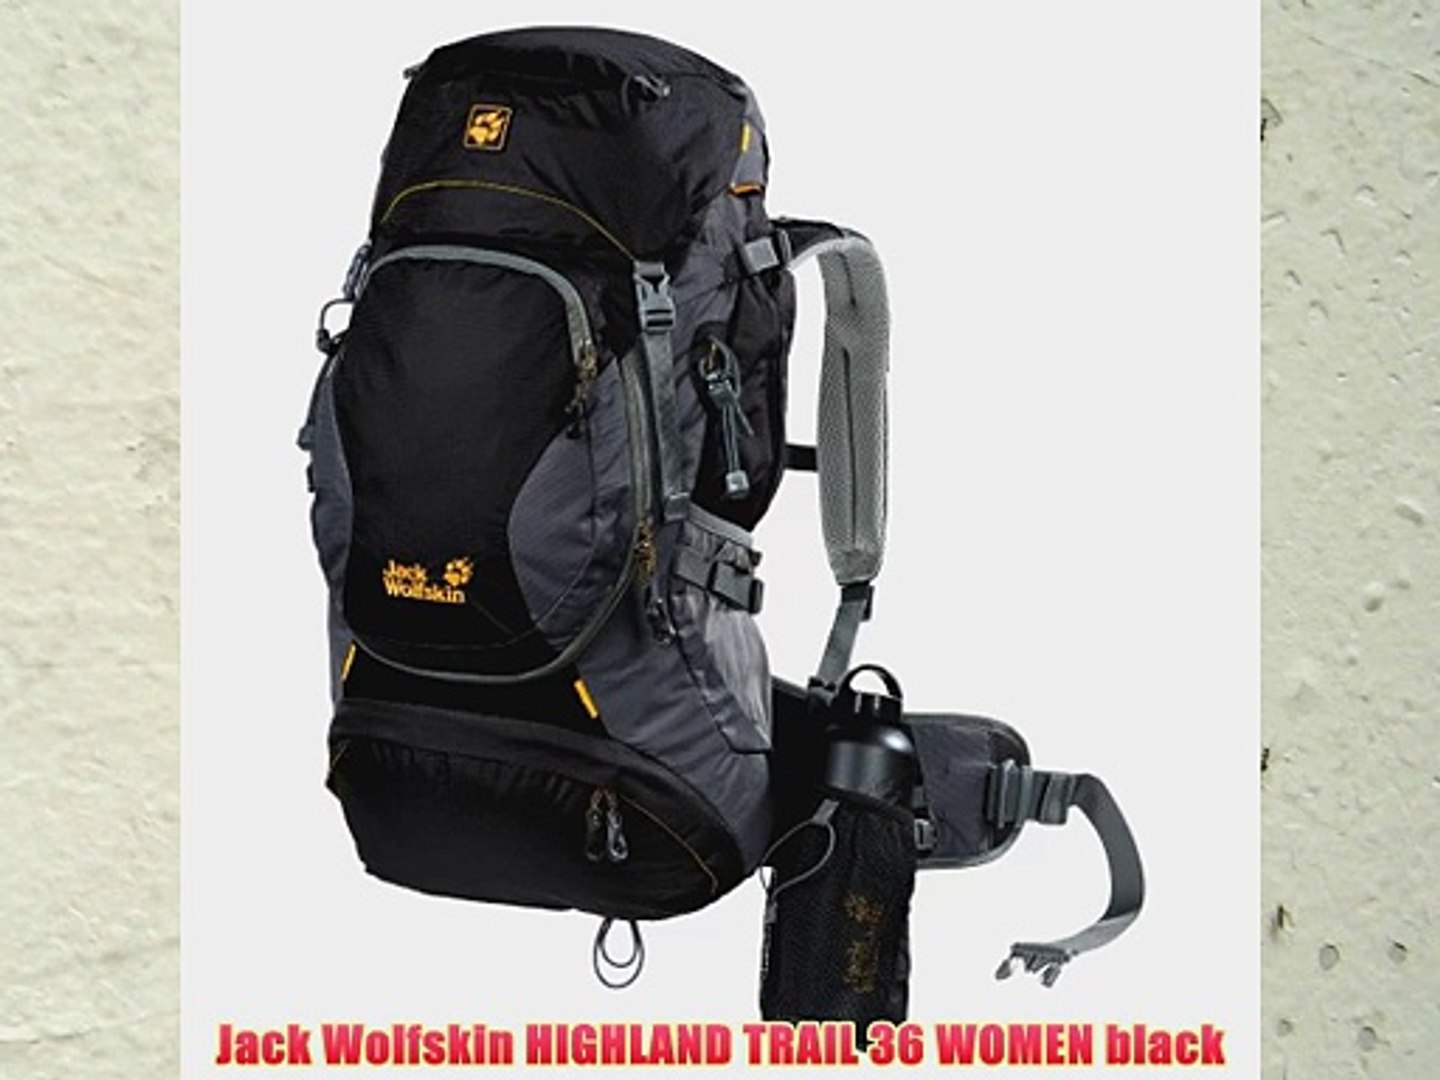 Jack Wolfskin HIGHLAND TRAIL 36 WOMEN black - video Dailymotion